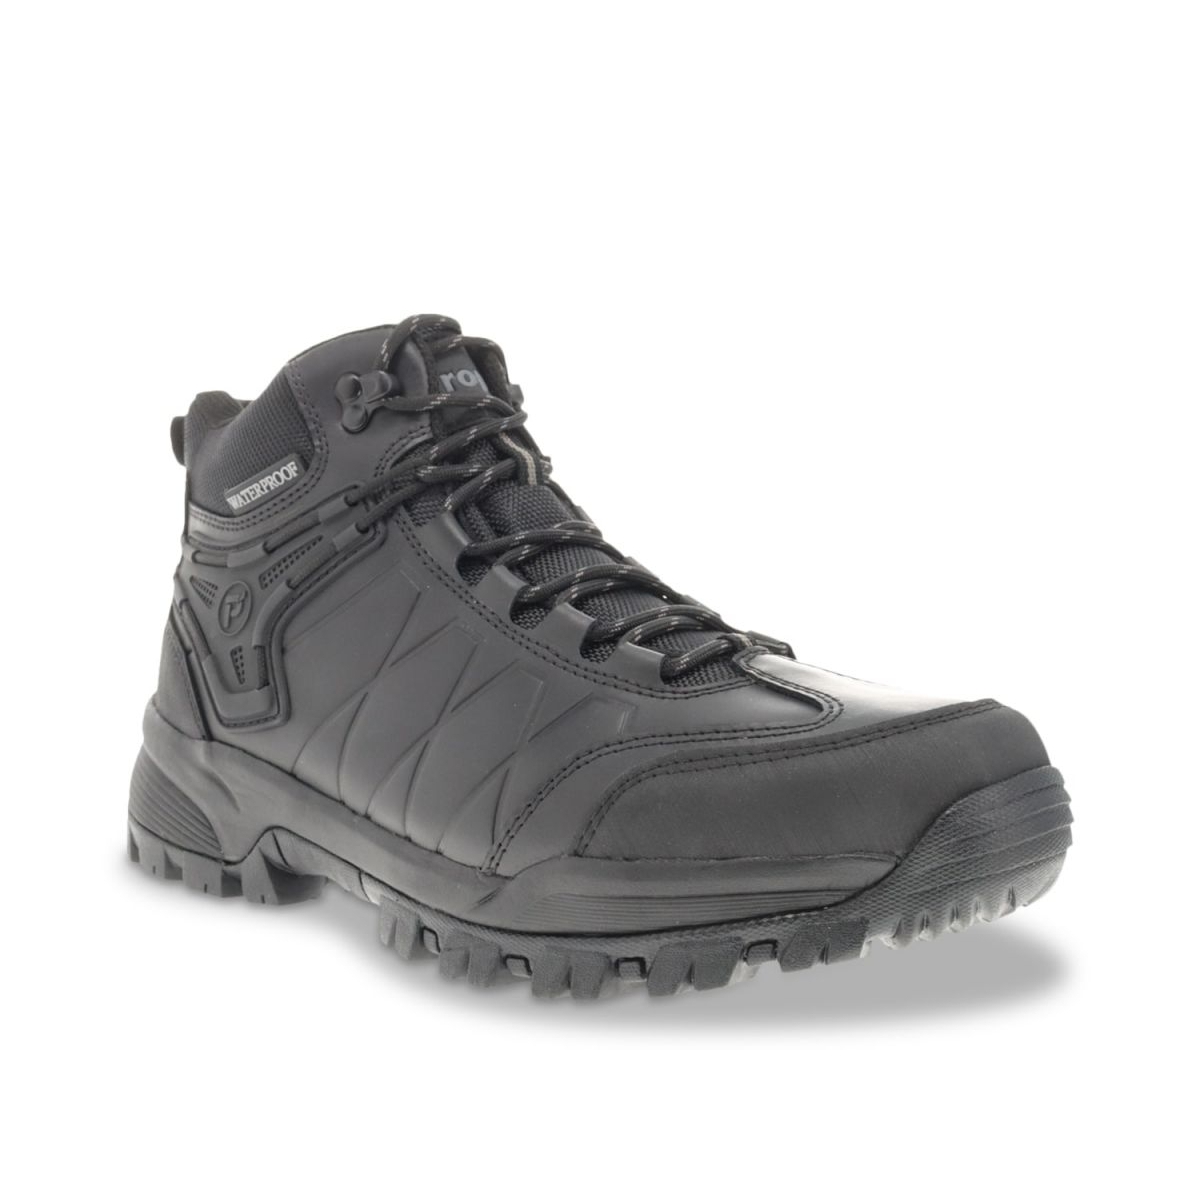 Propet Men's Ridge Walker Force Hiking Boots Black - MBA052LBLK BLACK - BLACK, 10